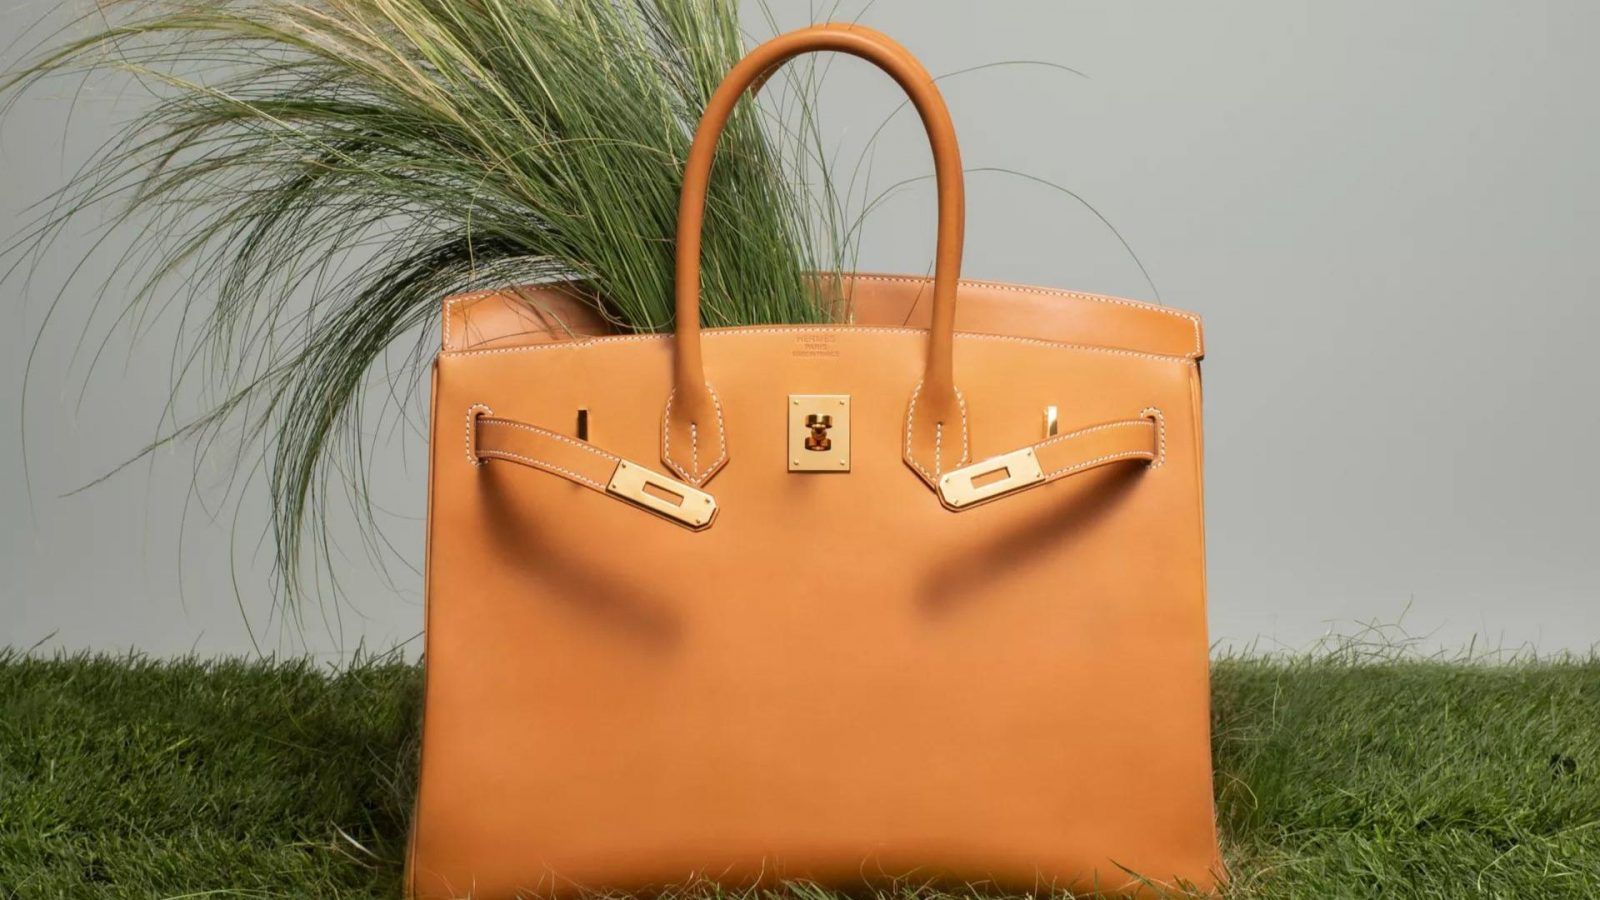 Compare & Buy Hermès Handbags in Singapore 2023